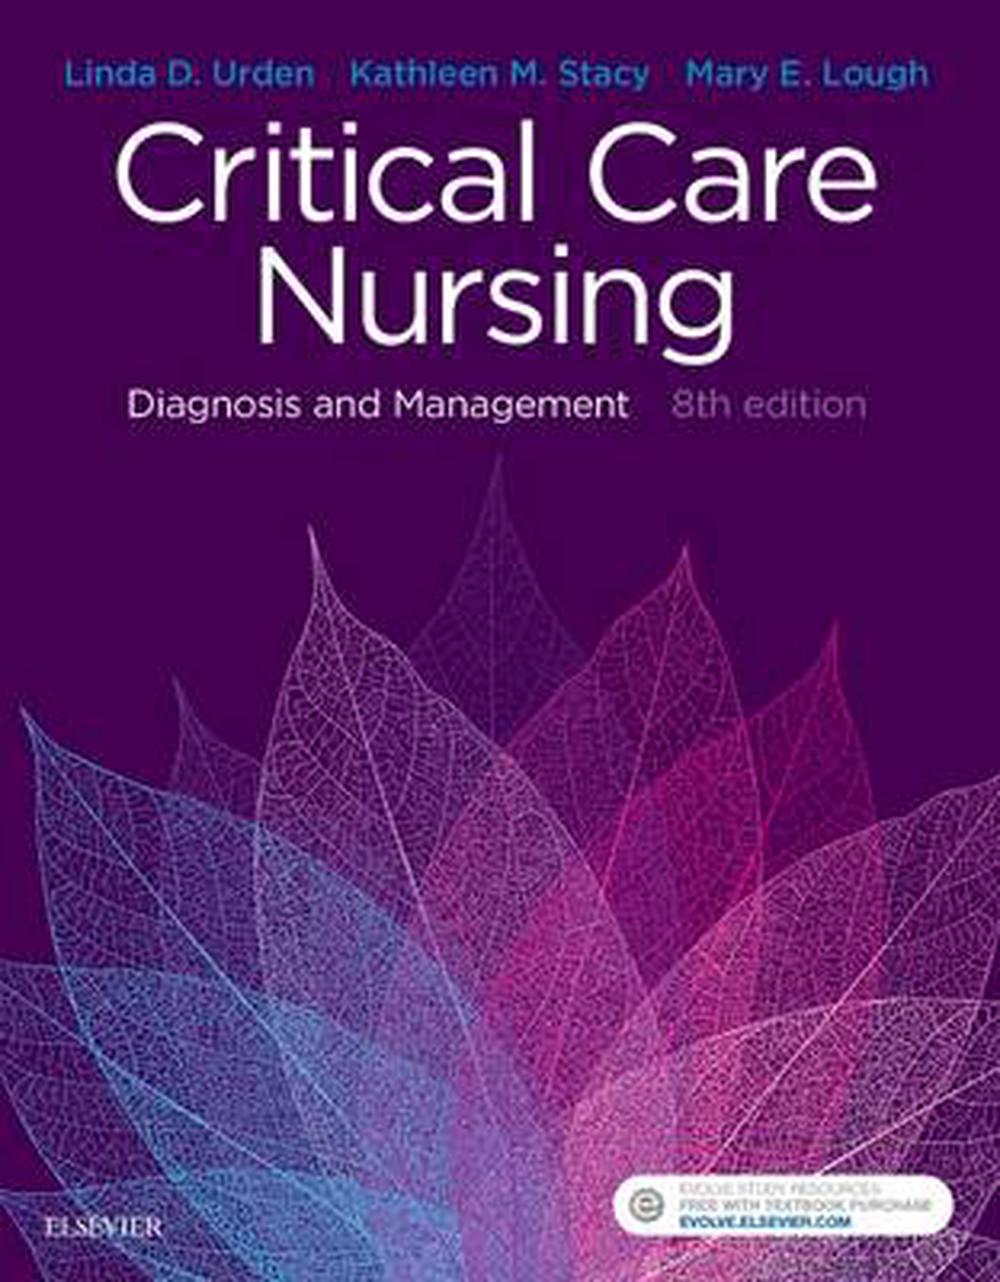 nursing research topics for critical care